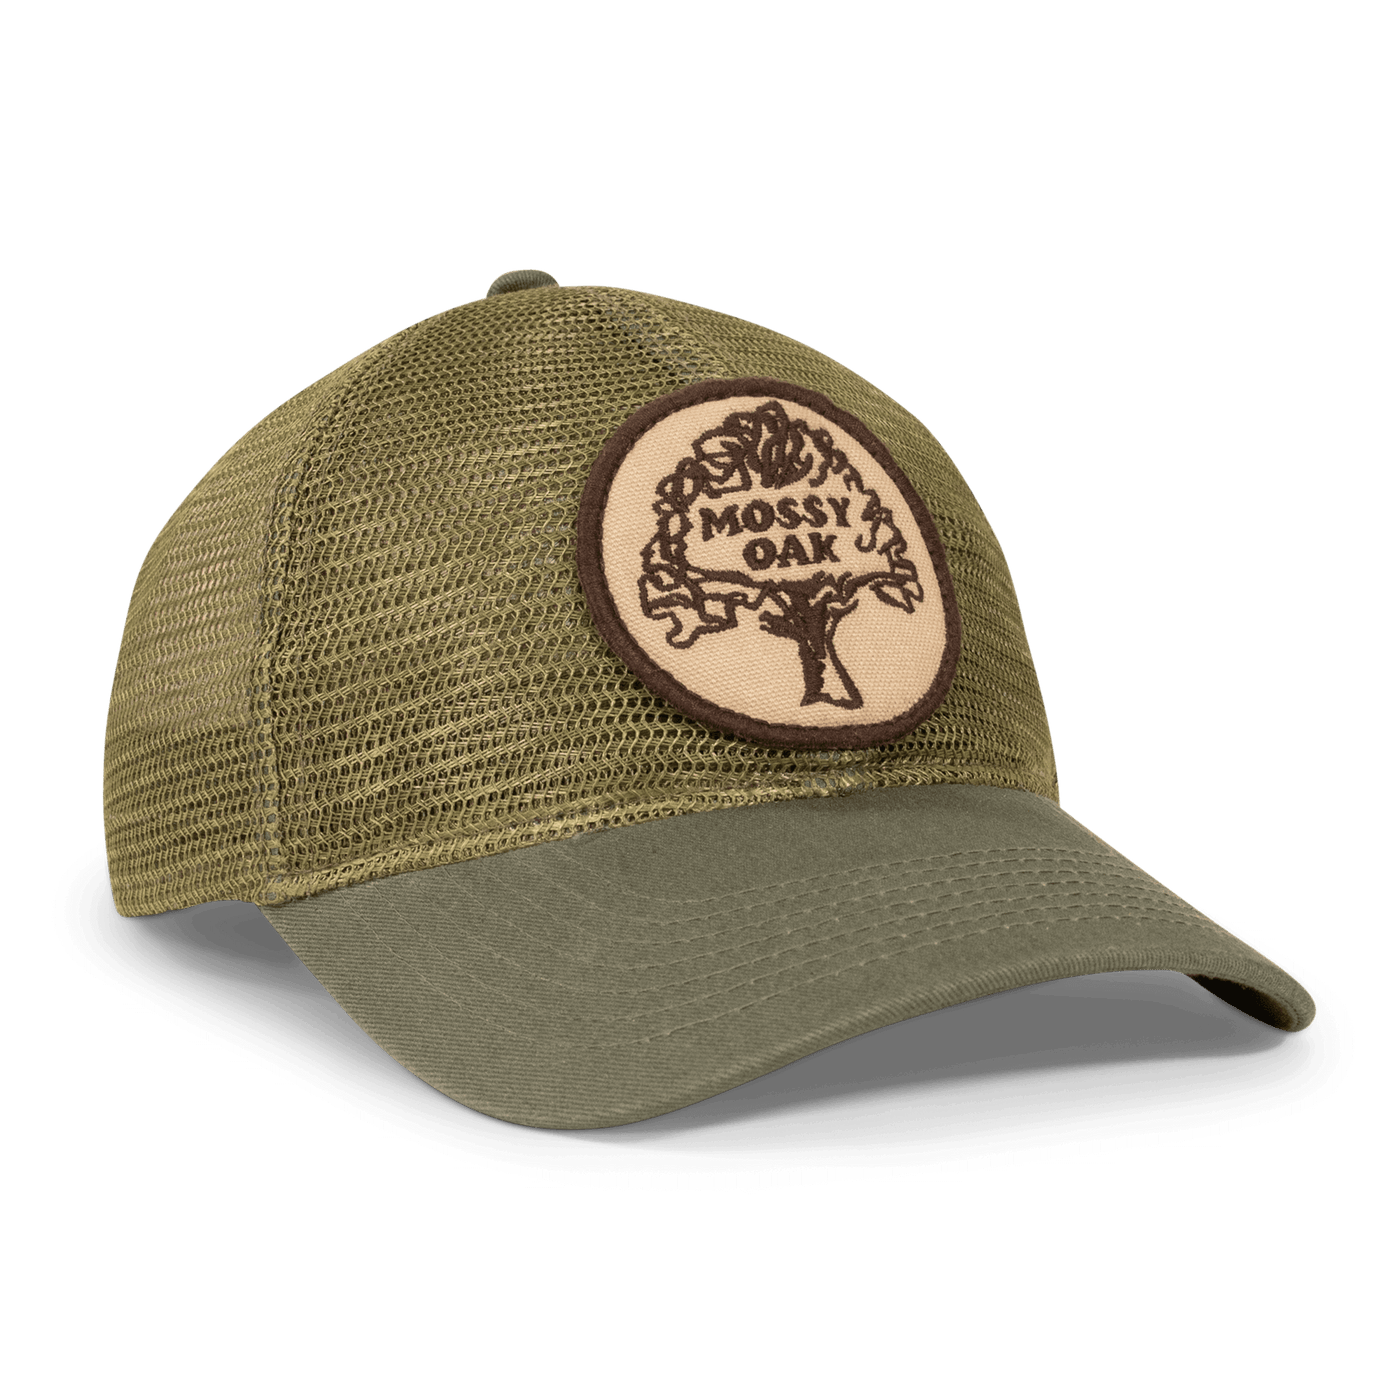 Vintage Mesh Hat – The Mossy Oak Store